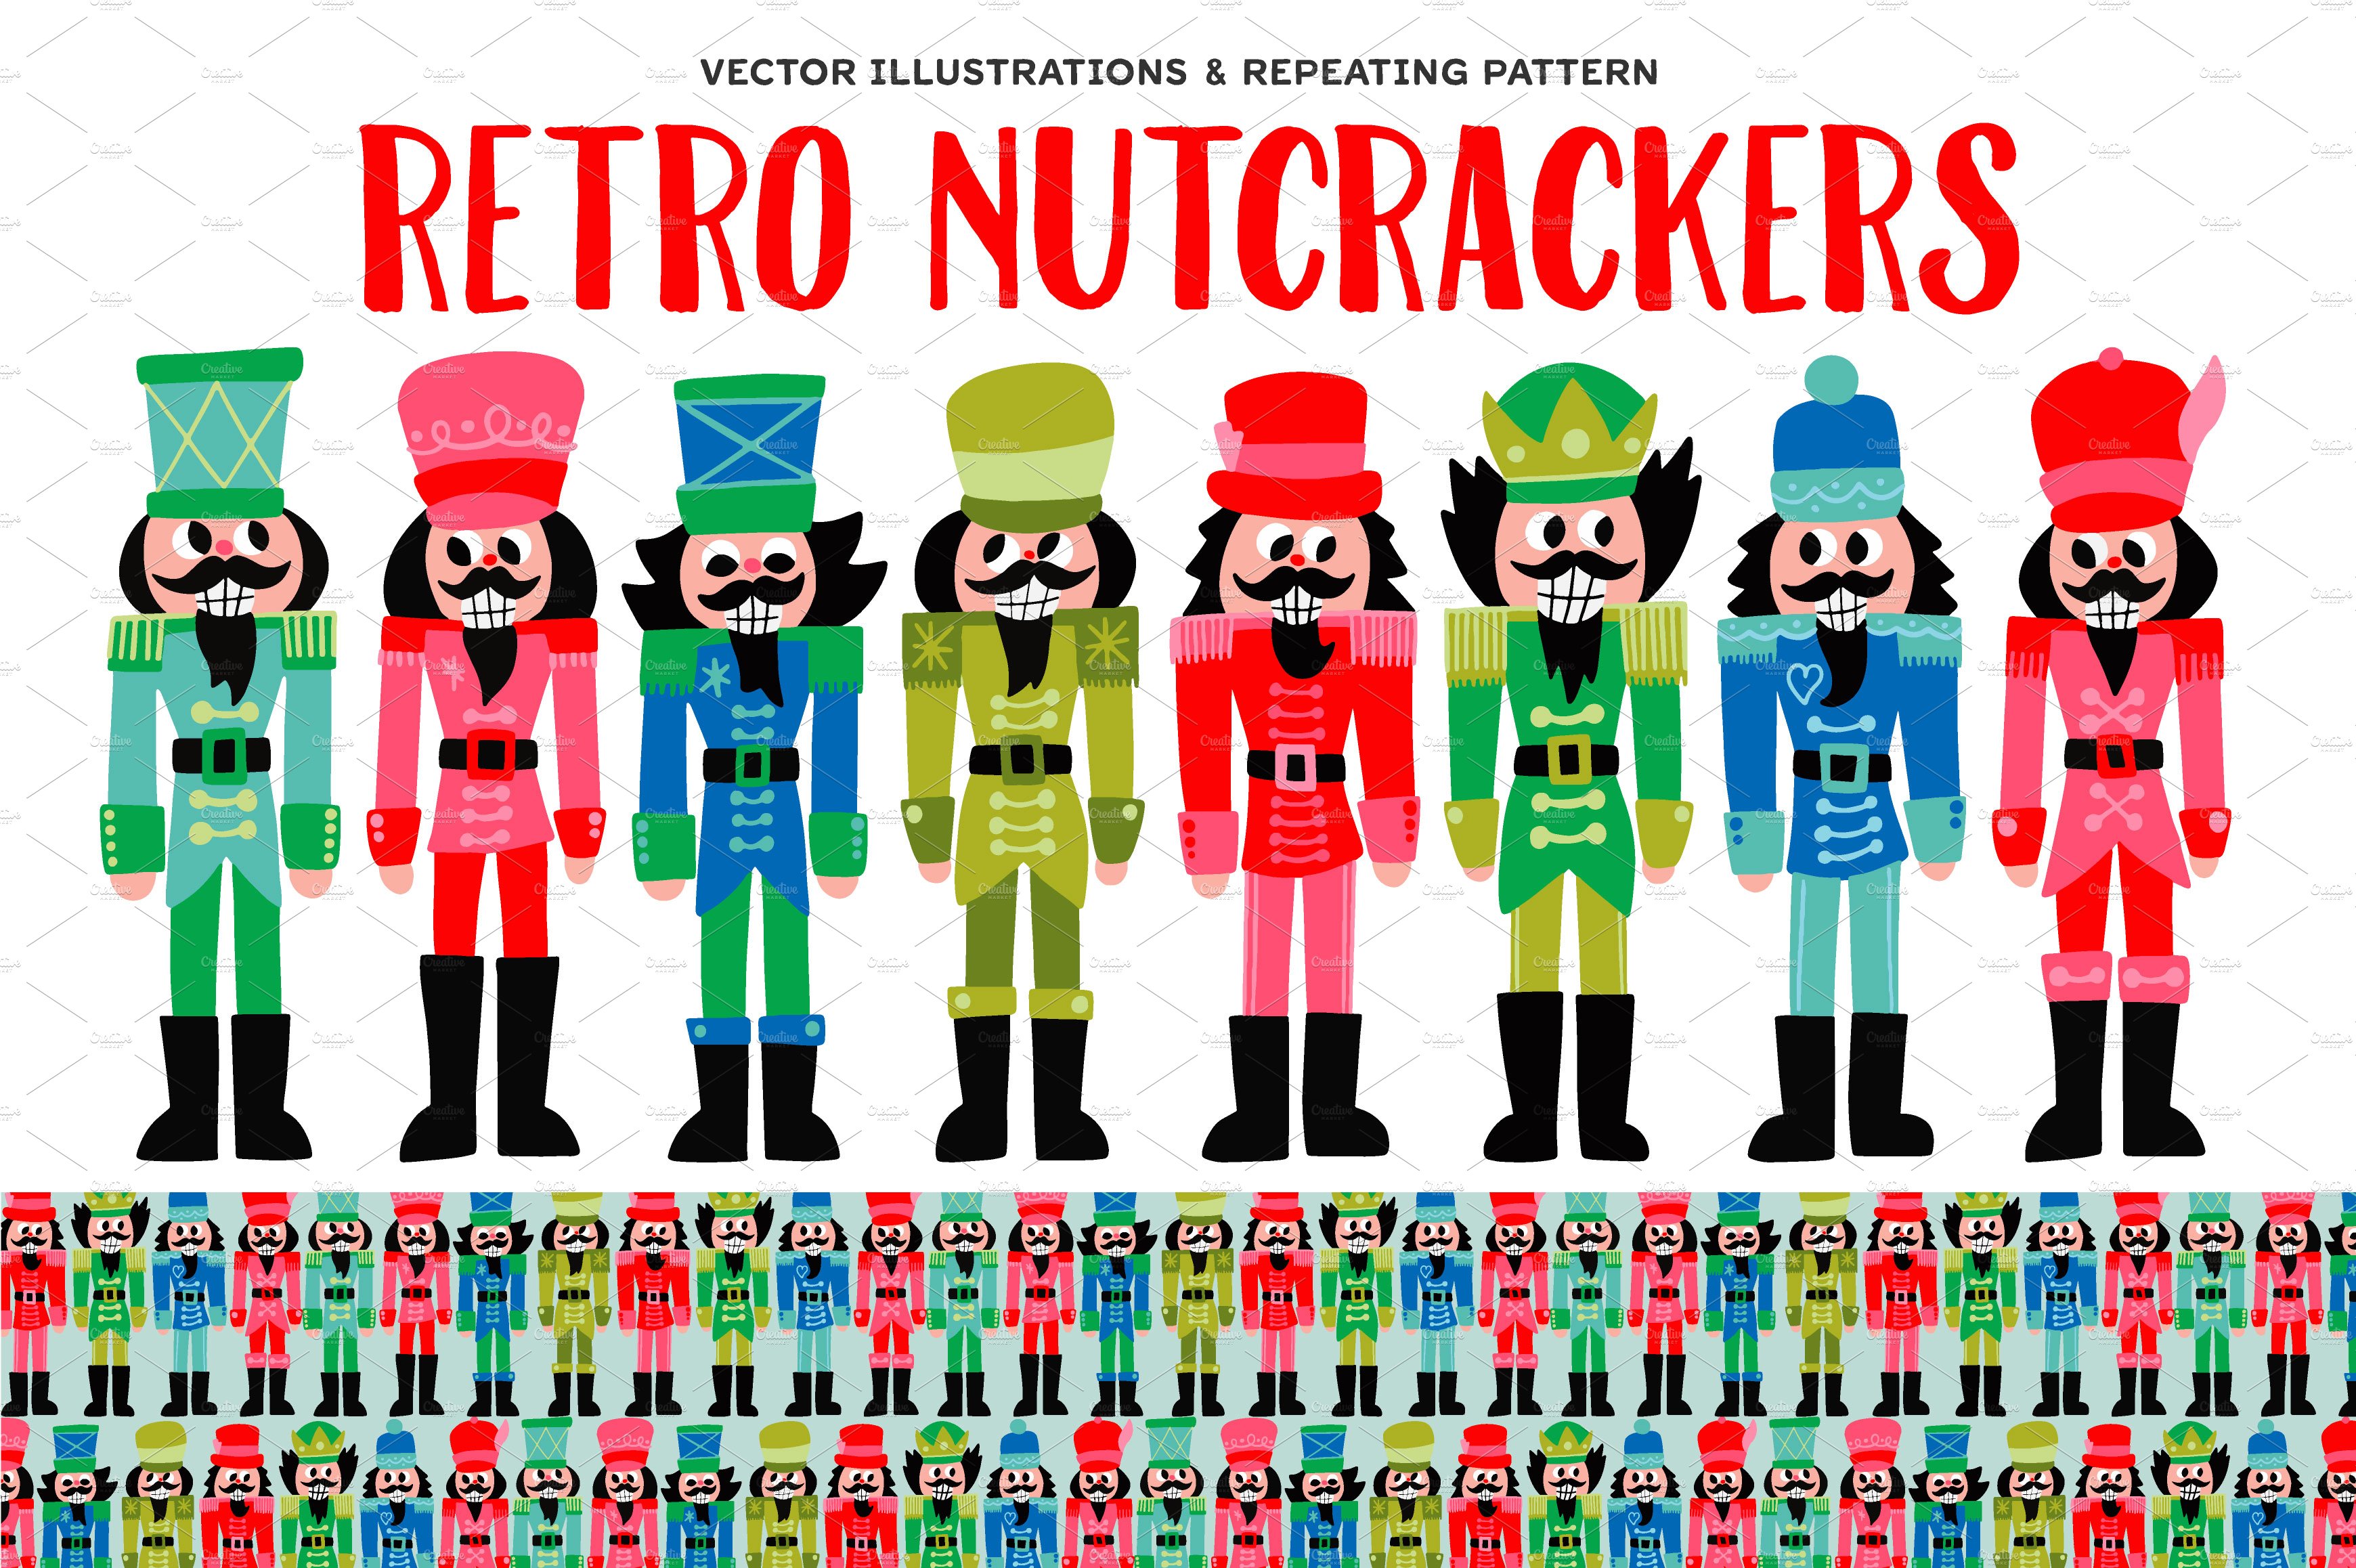 Retro Nutcrackers cover image.